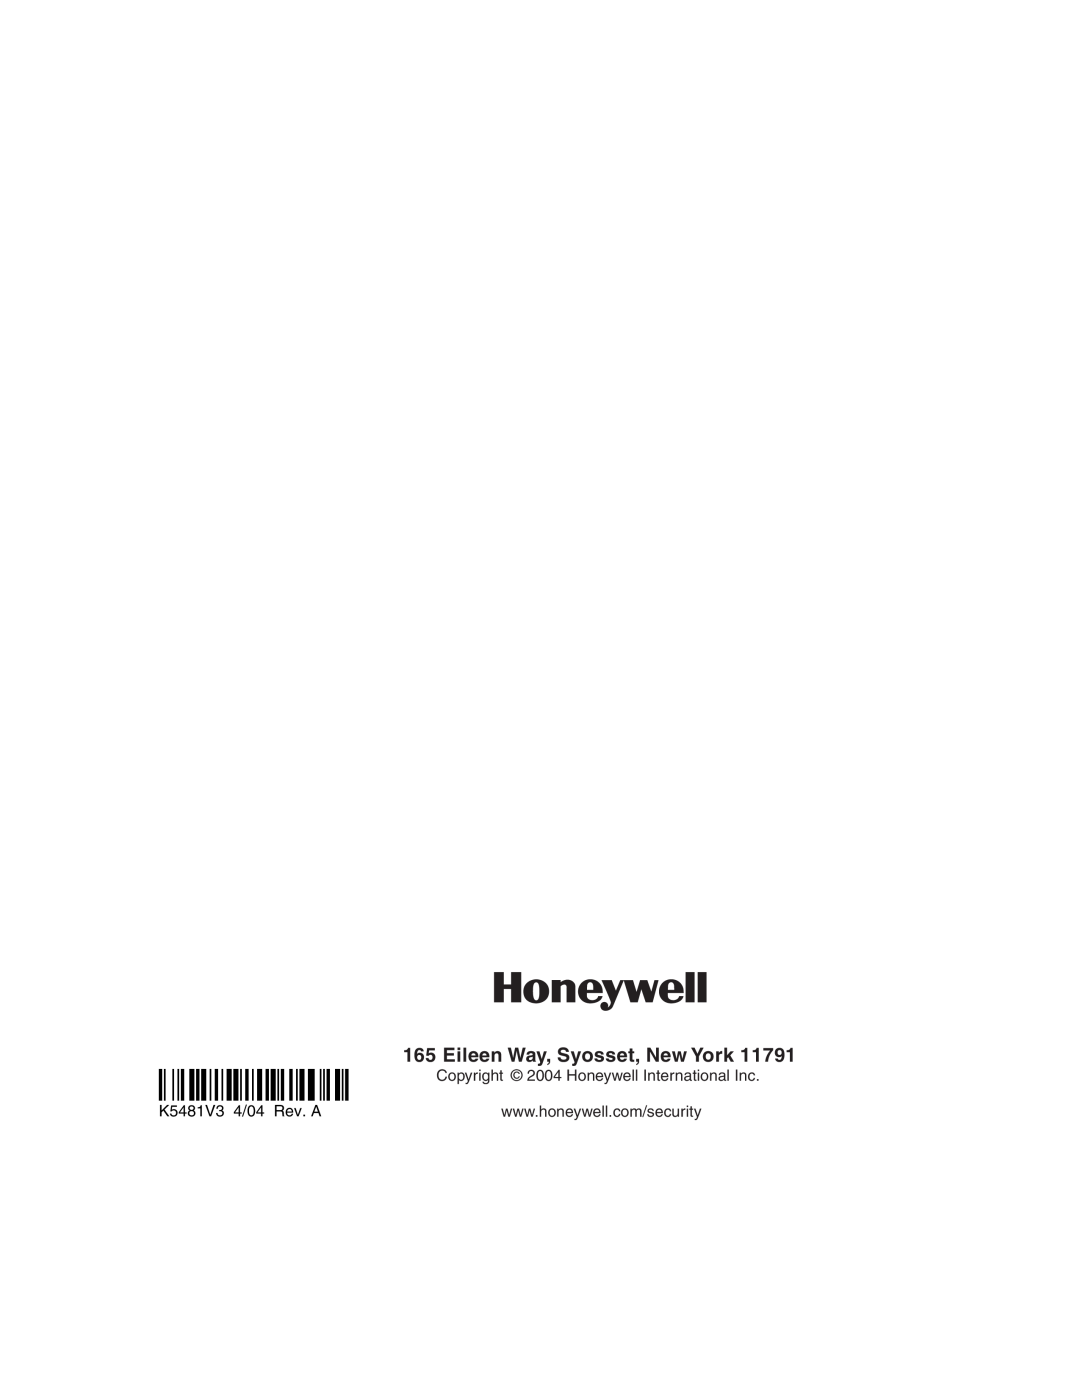 Honeywell LYNXR24 i.9Al, Eileen Way, Syosset, New York, Copyright 2004 Honeywell International Inc, K5481V3 4/04 Rev. A 